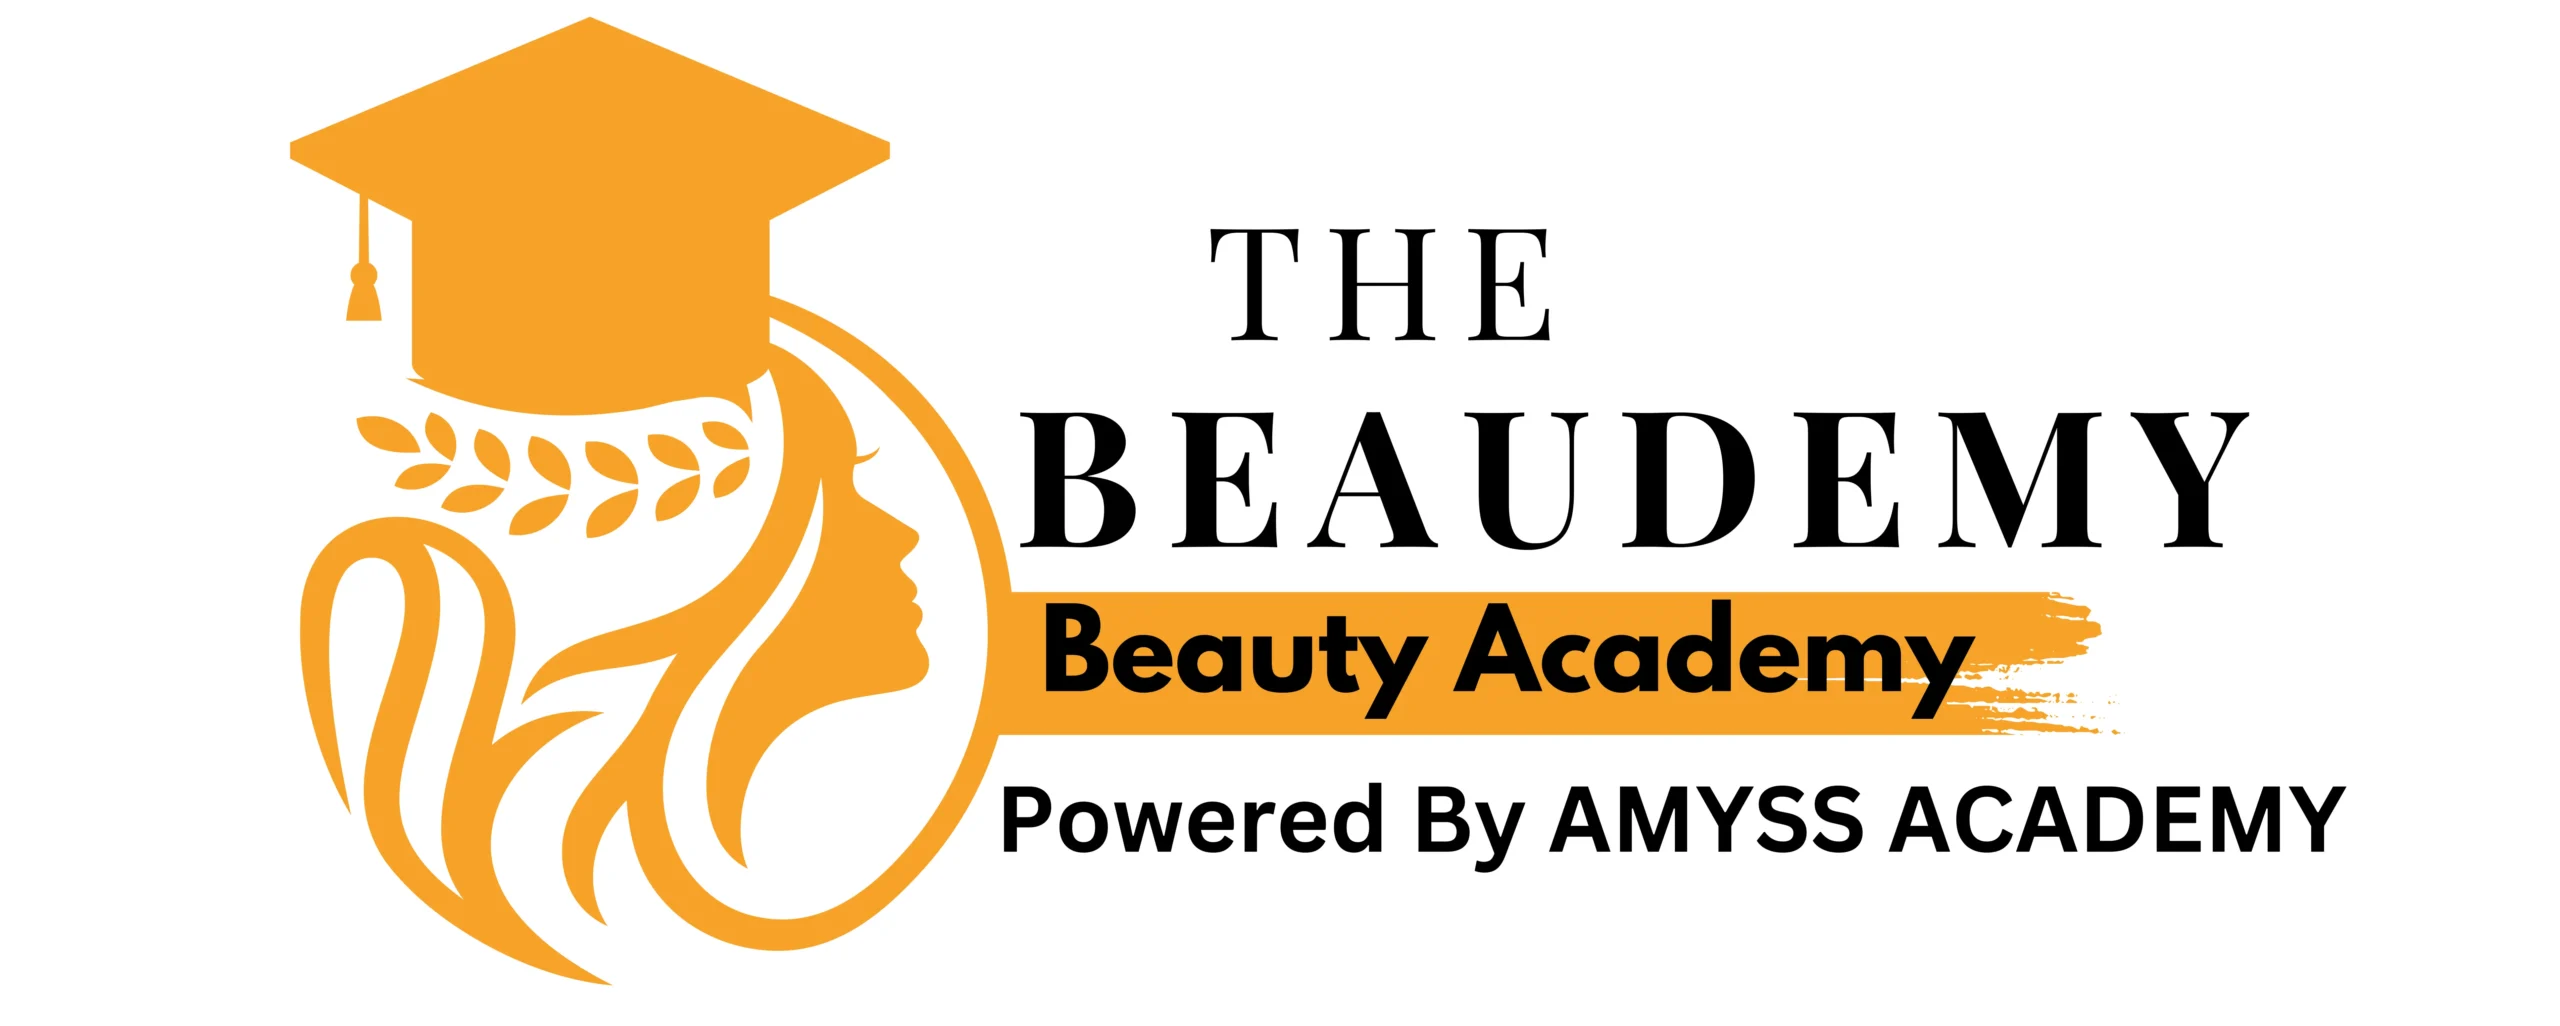 best beauty academy in Hyderabad logo (2)